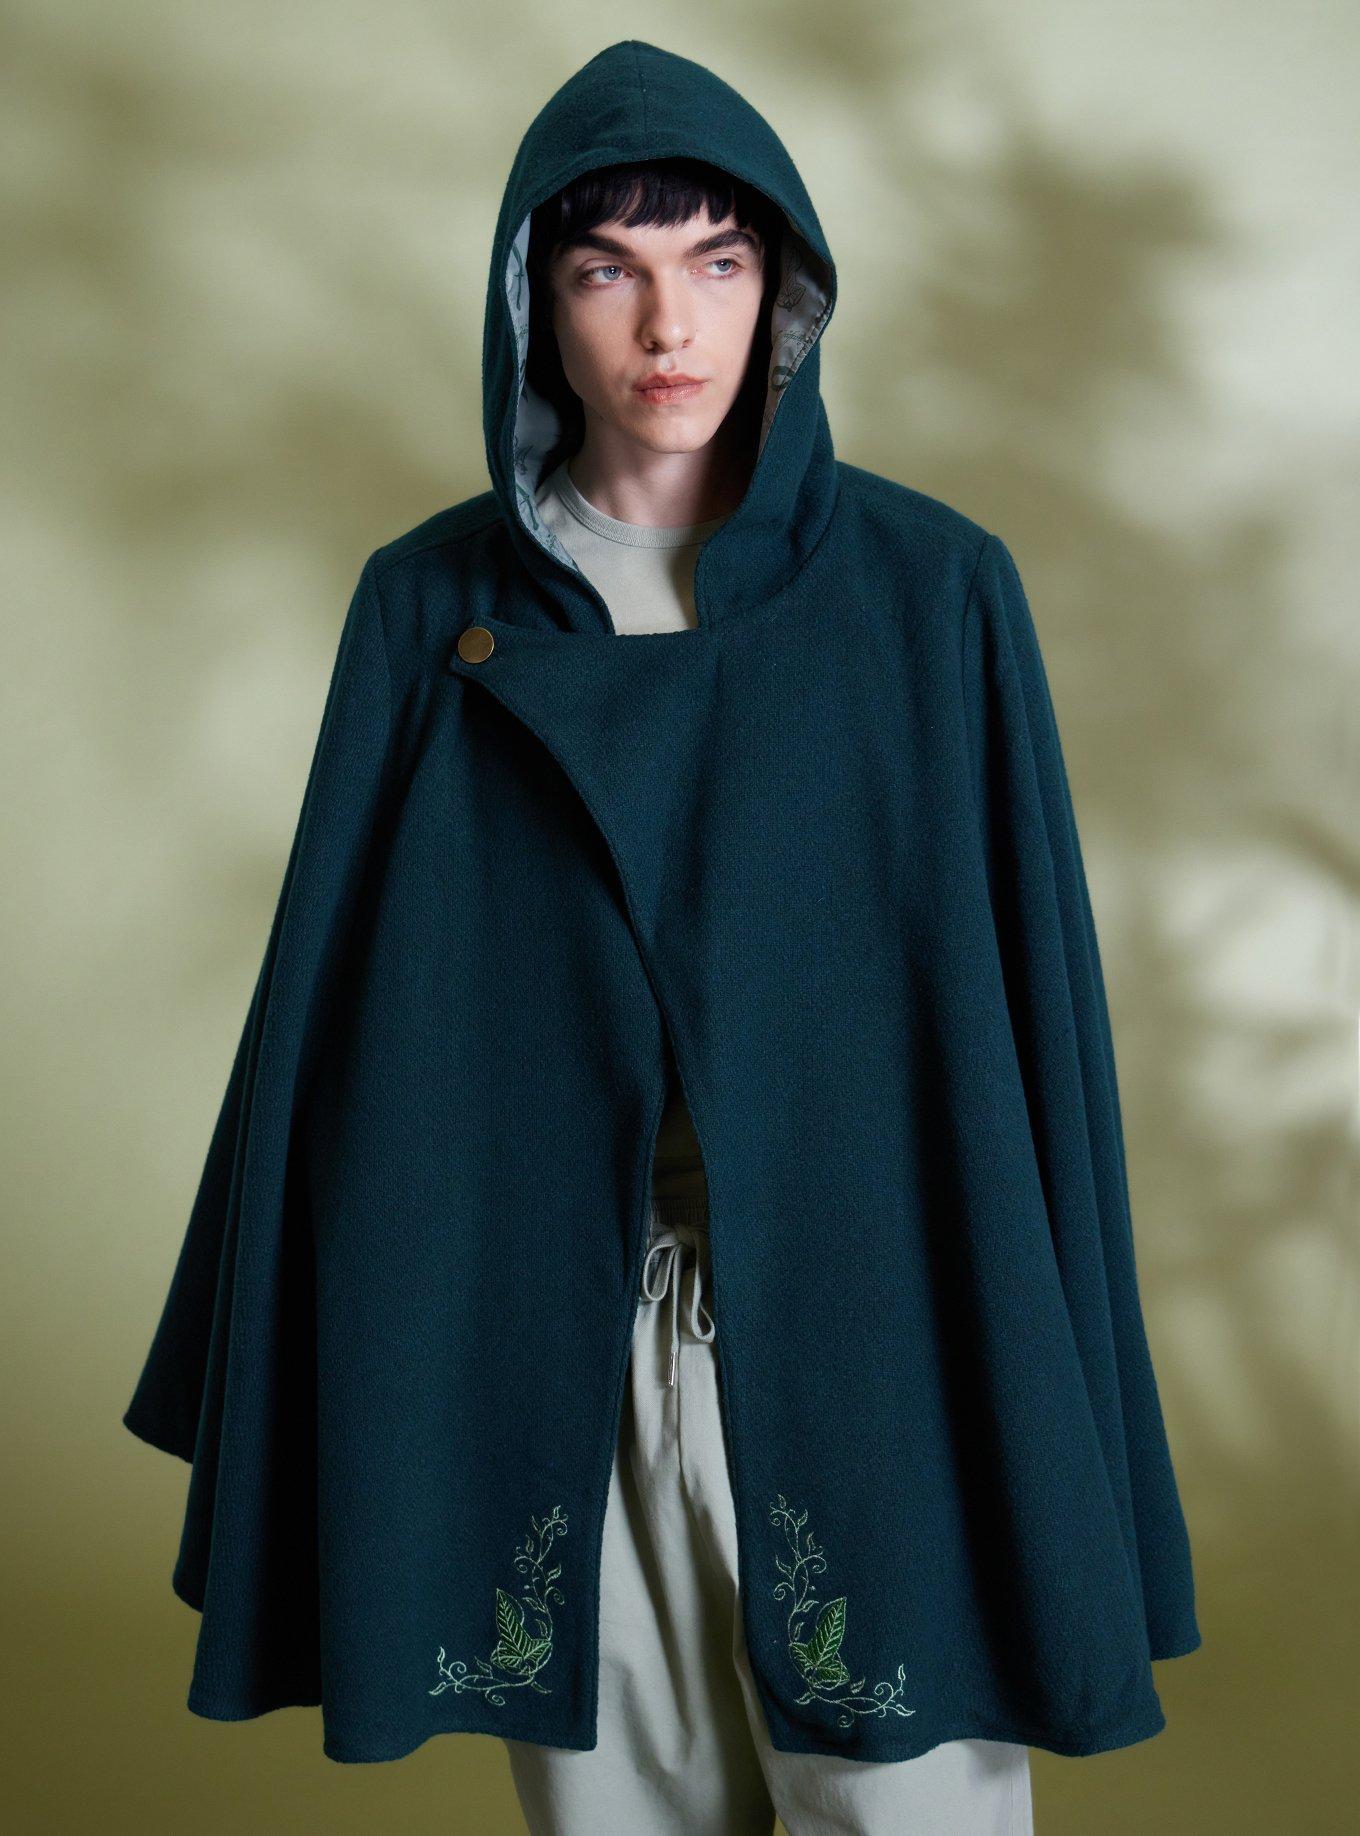 wees gegroet Draaien mobiel The Lord Of The Rings Frodo Elven Cloak | Her Universe